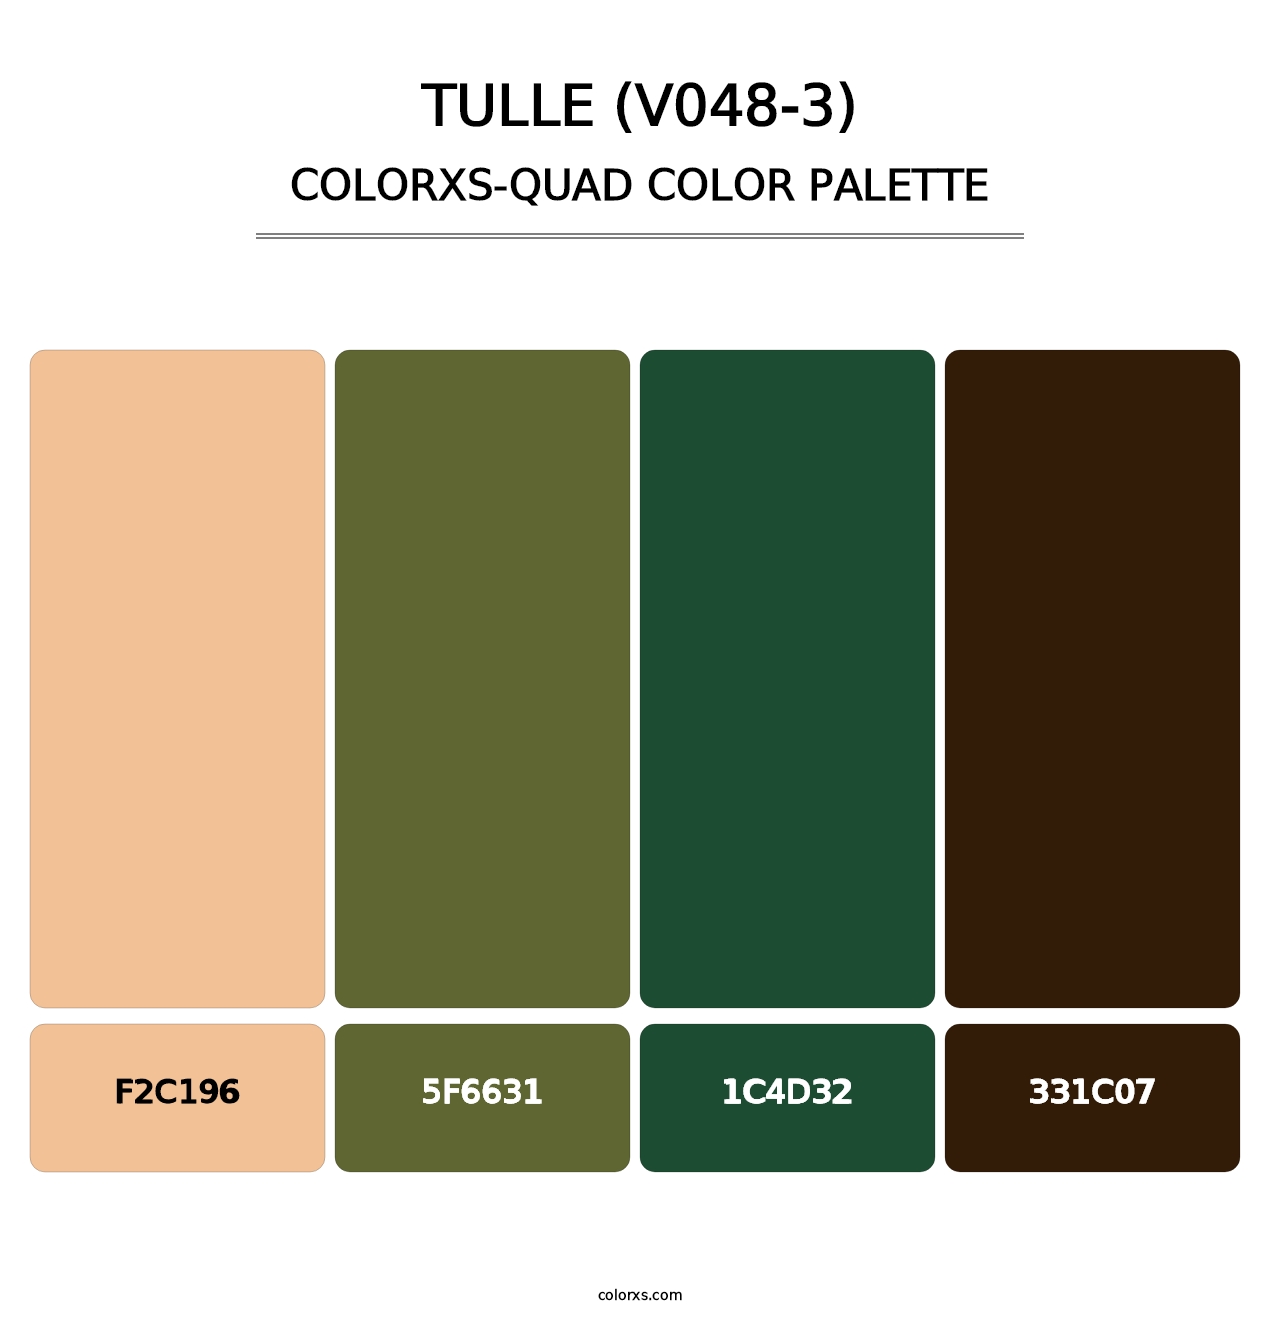 Tulle (V048-3) - Colorxs Quad Palette